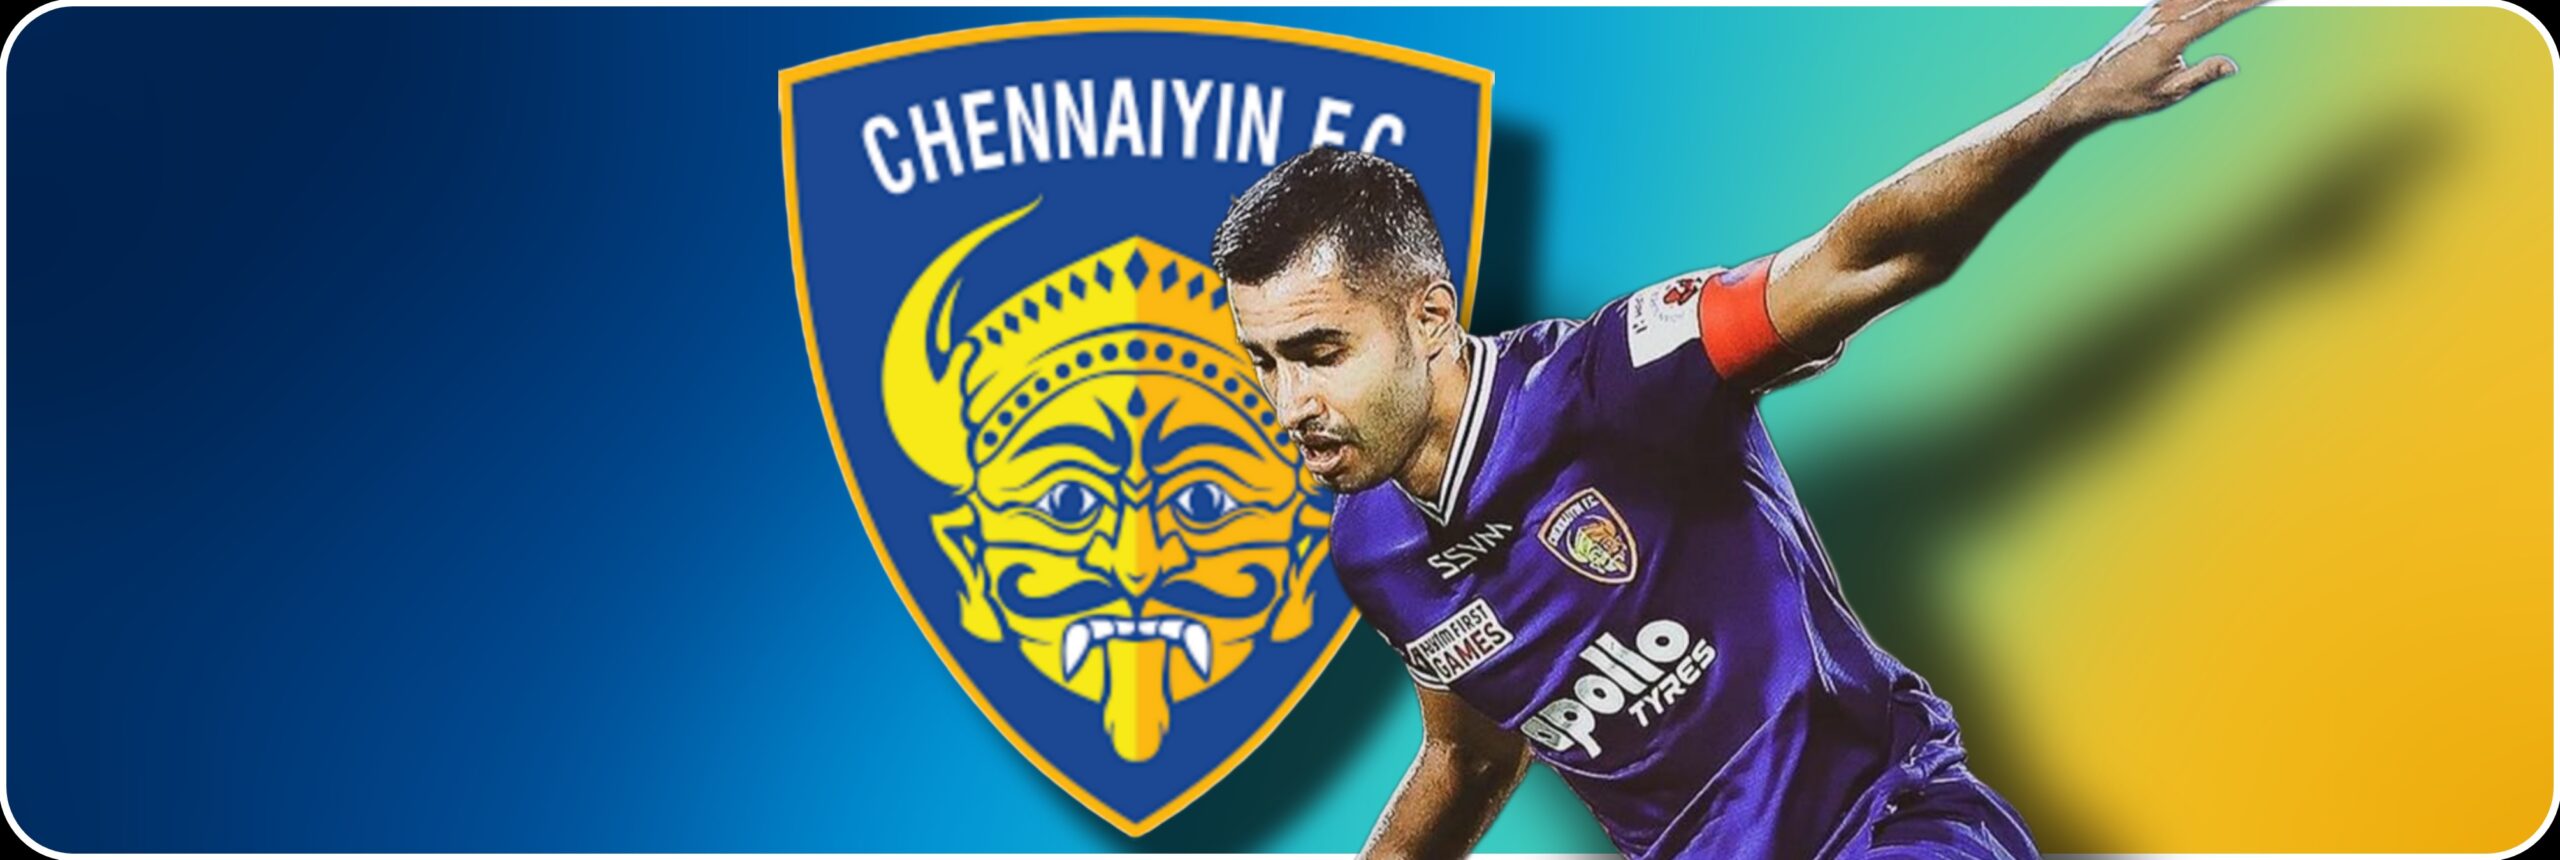 Chennaiyin FC Gears Up for Reunion as Midfielder Rafael Crivellaro Returns